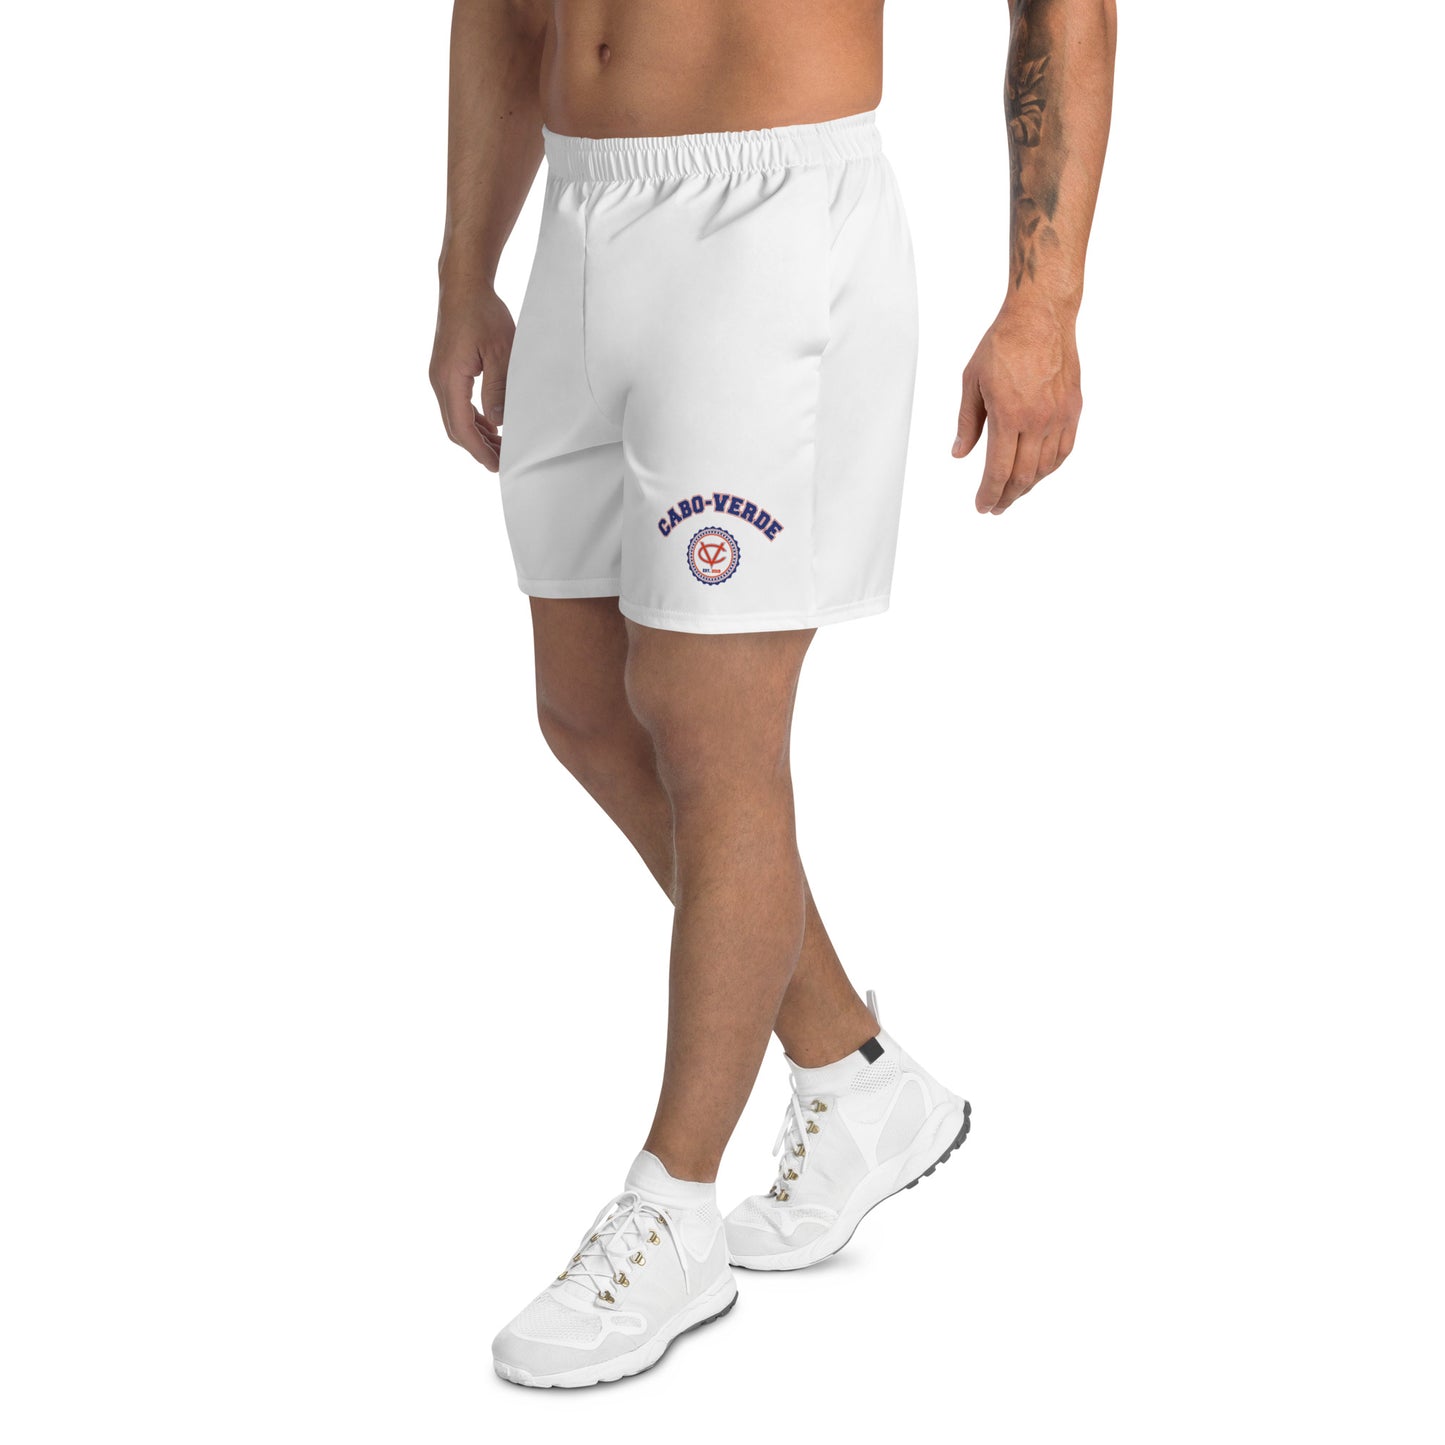 CvLs Men's Athletic Shorts